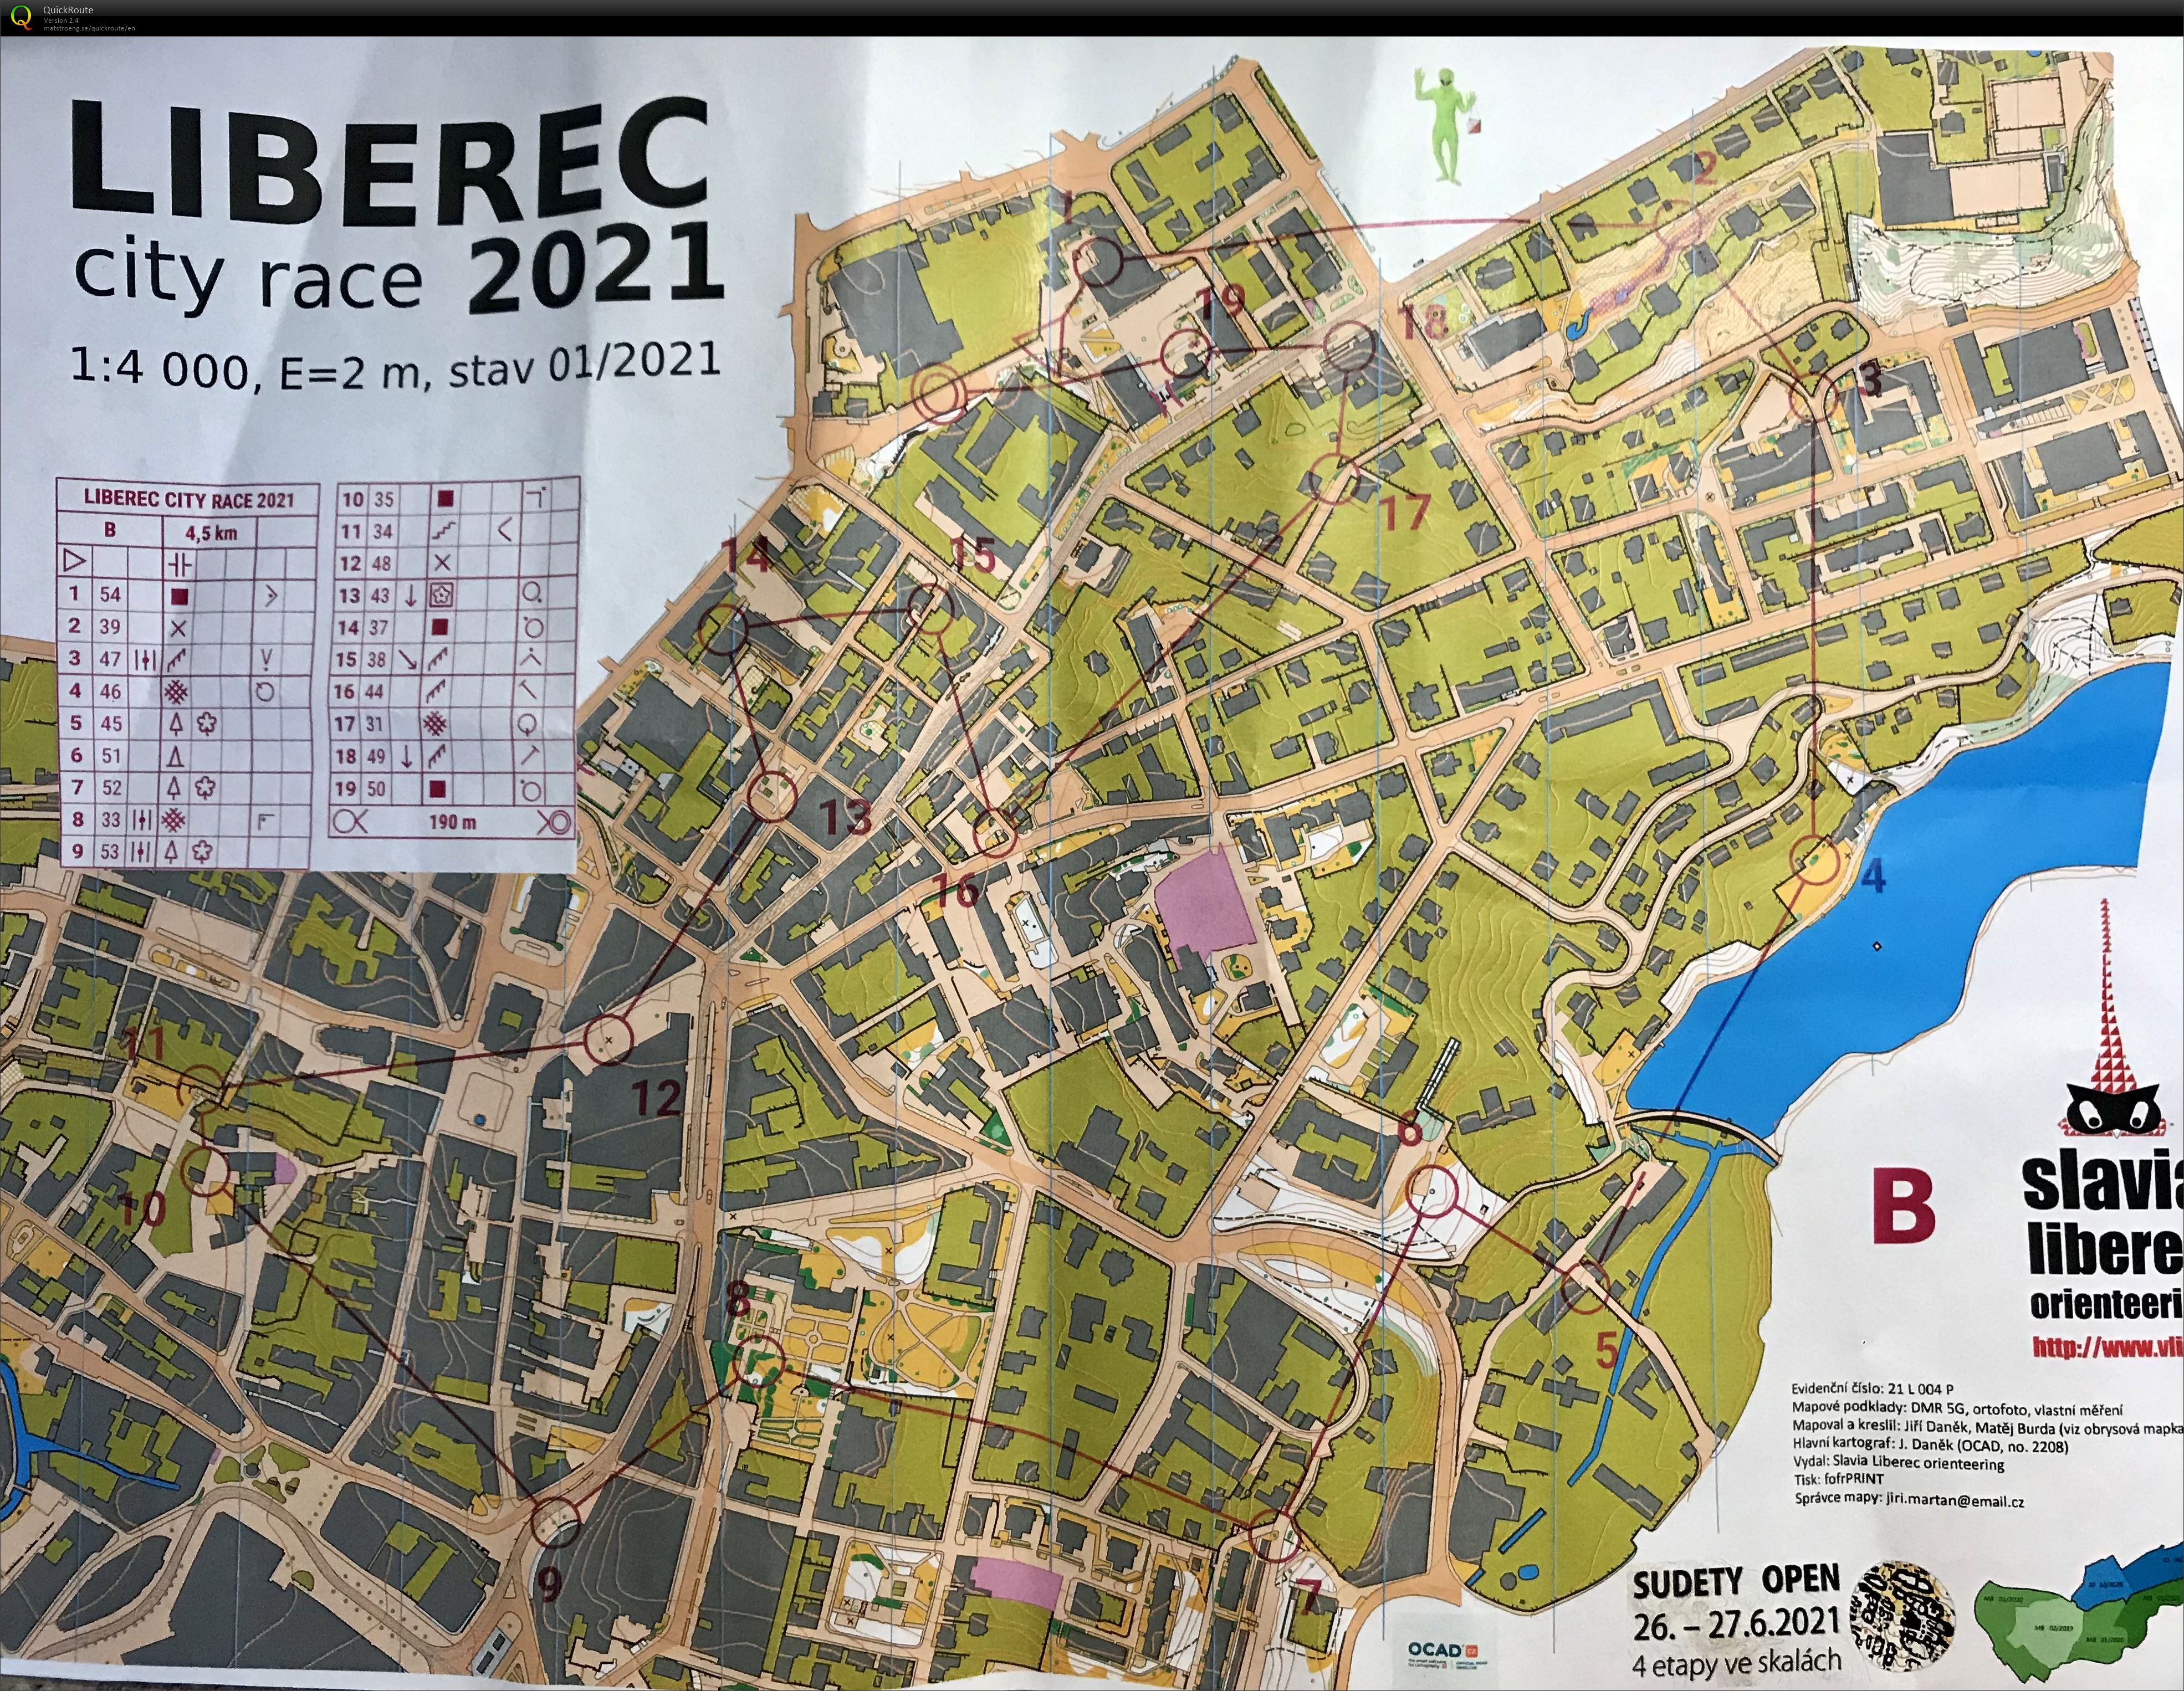 Liberec city race (21/02/2021)